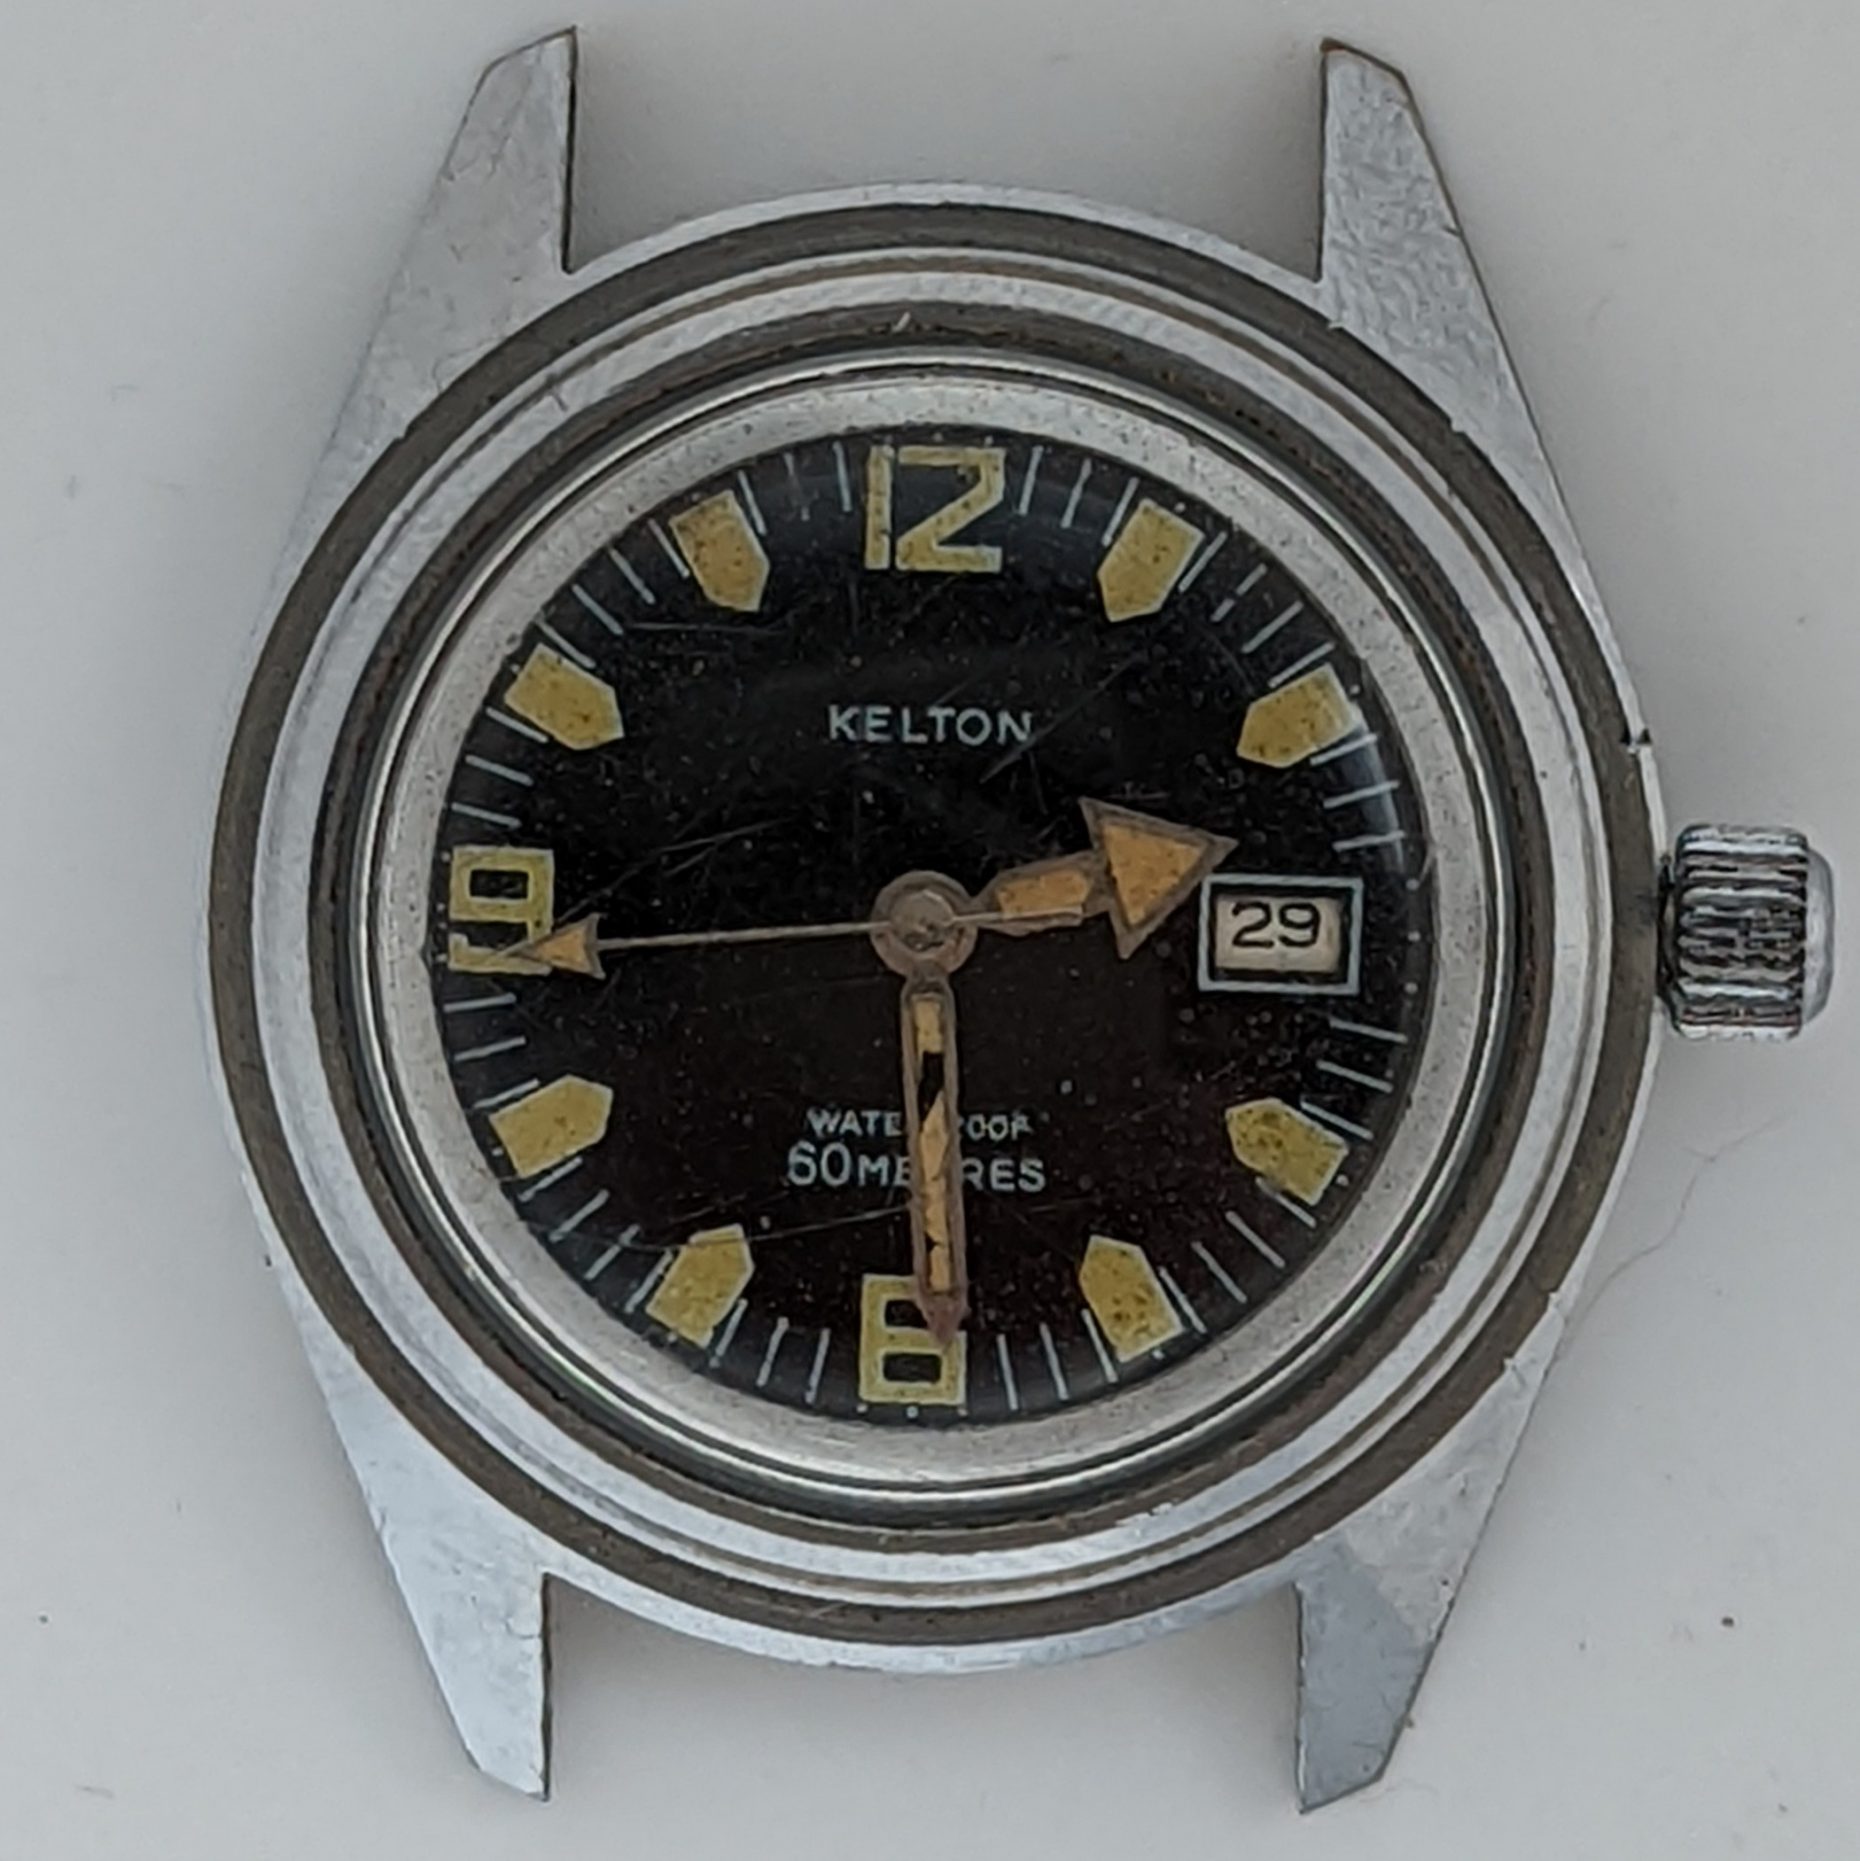 Kelton Skin Diver 1968 Ref. 2157 2568